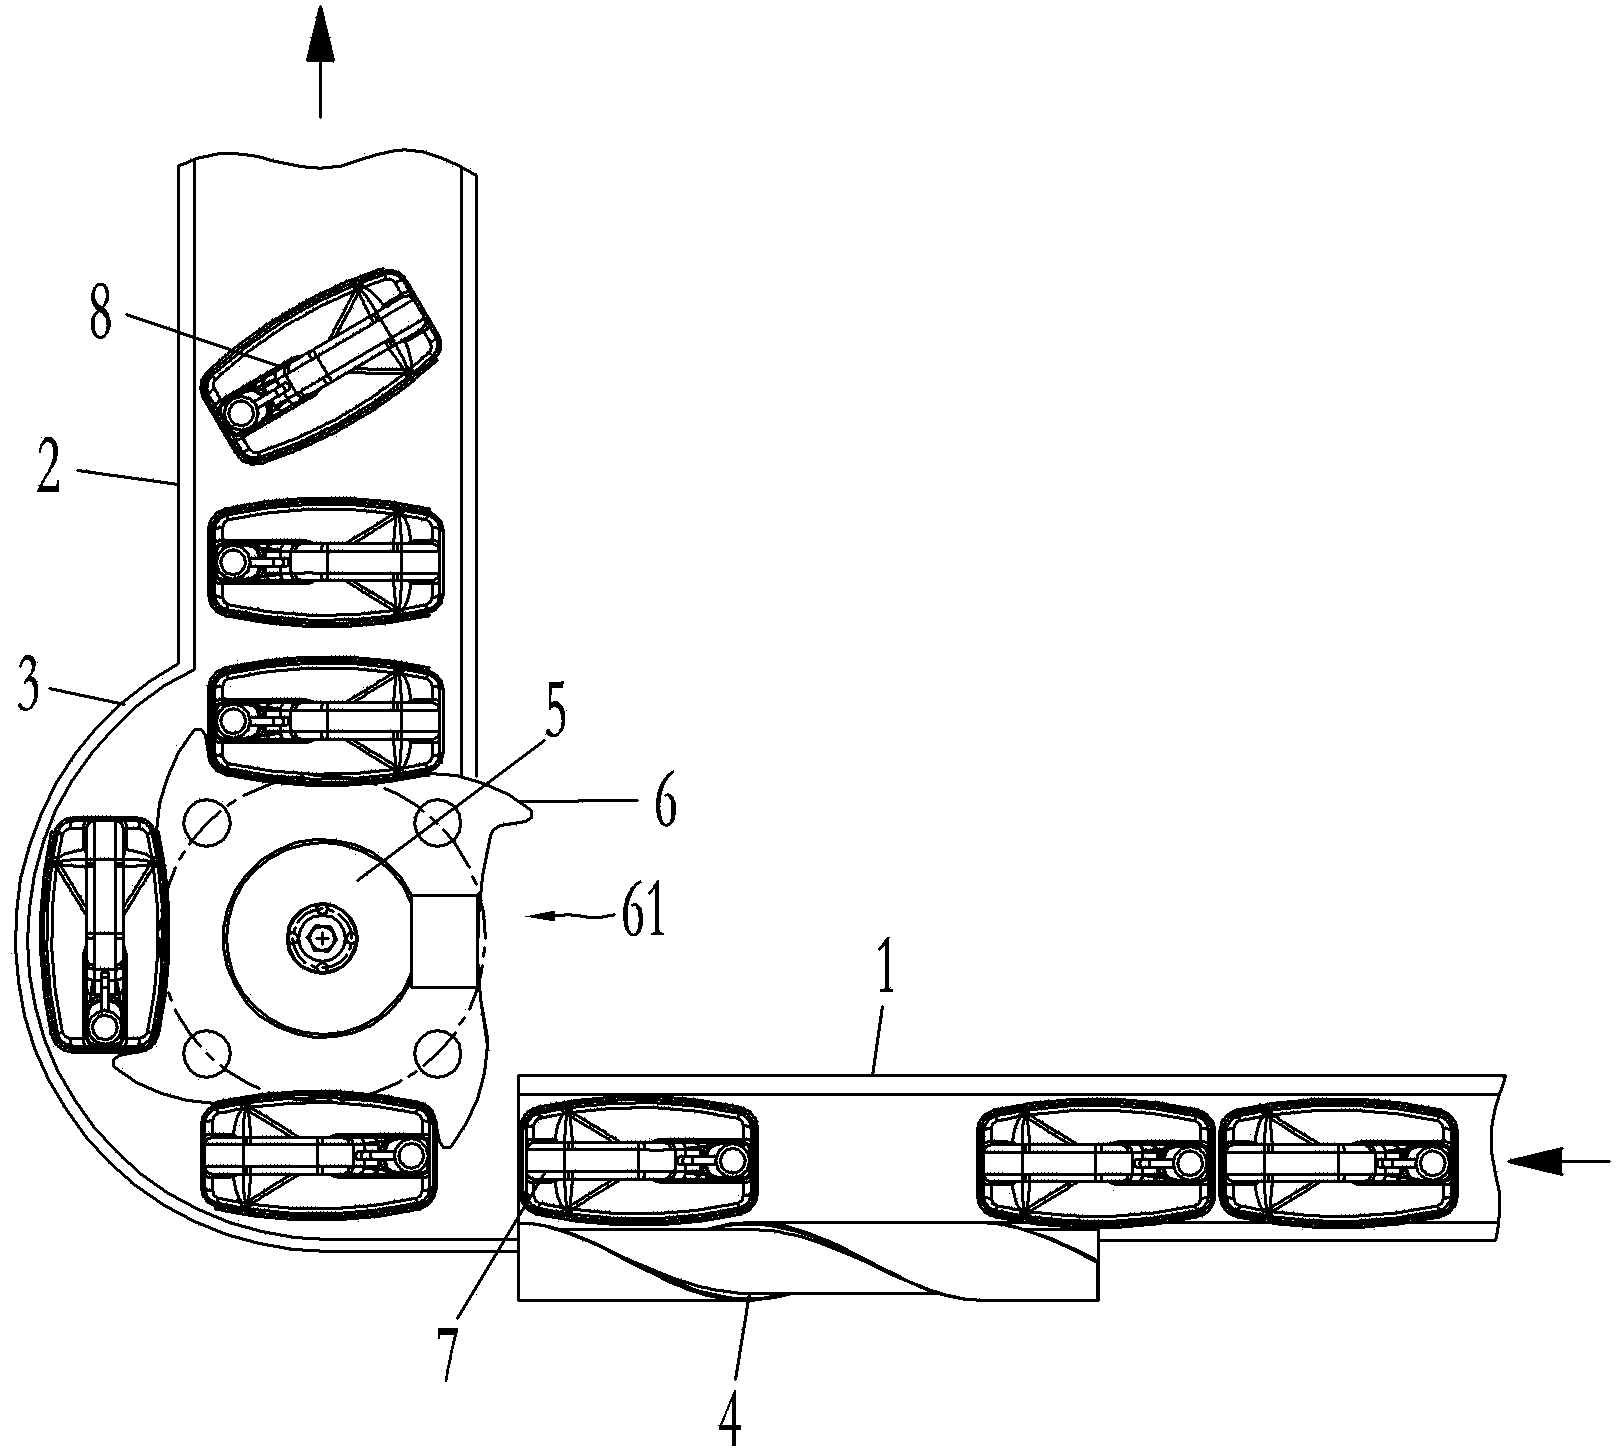 Bottle steering mechanism